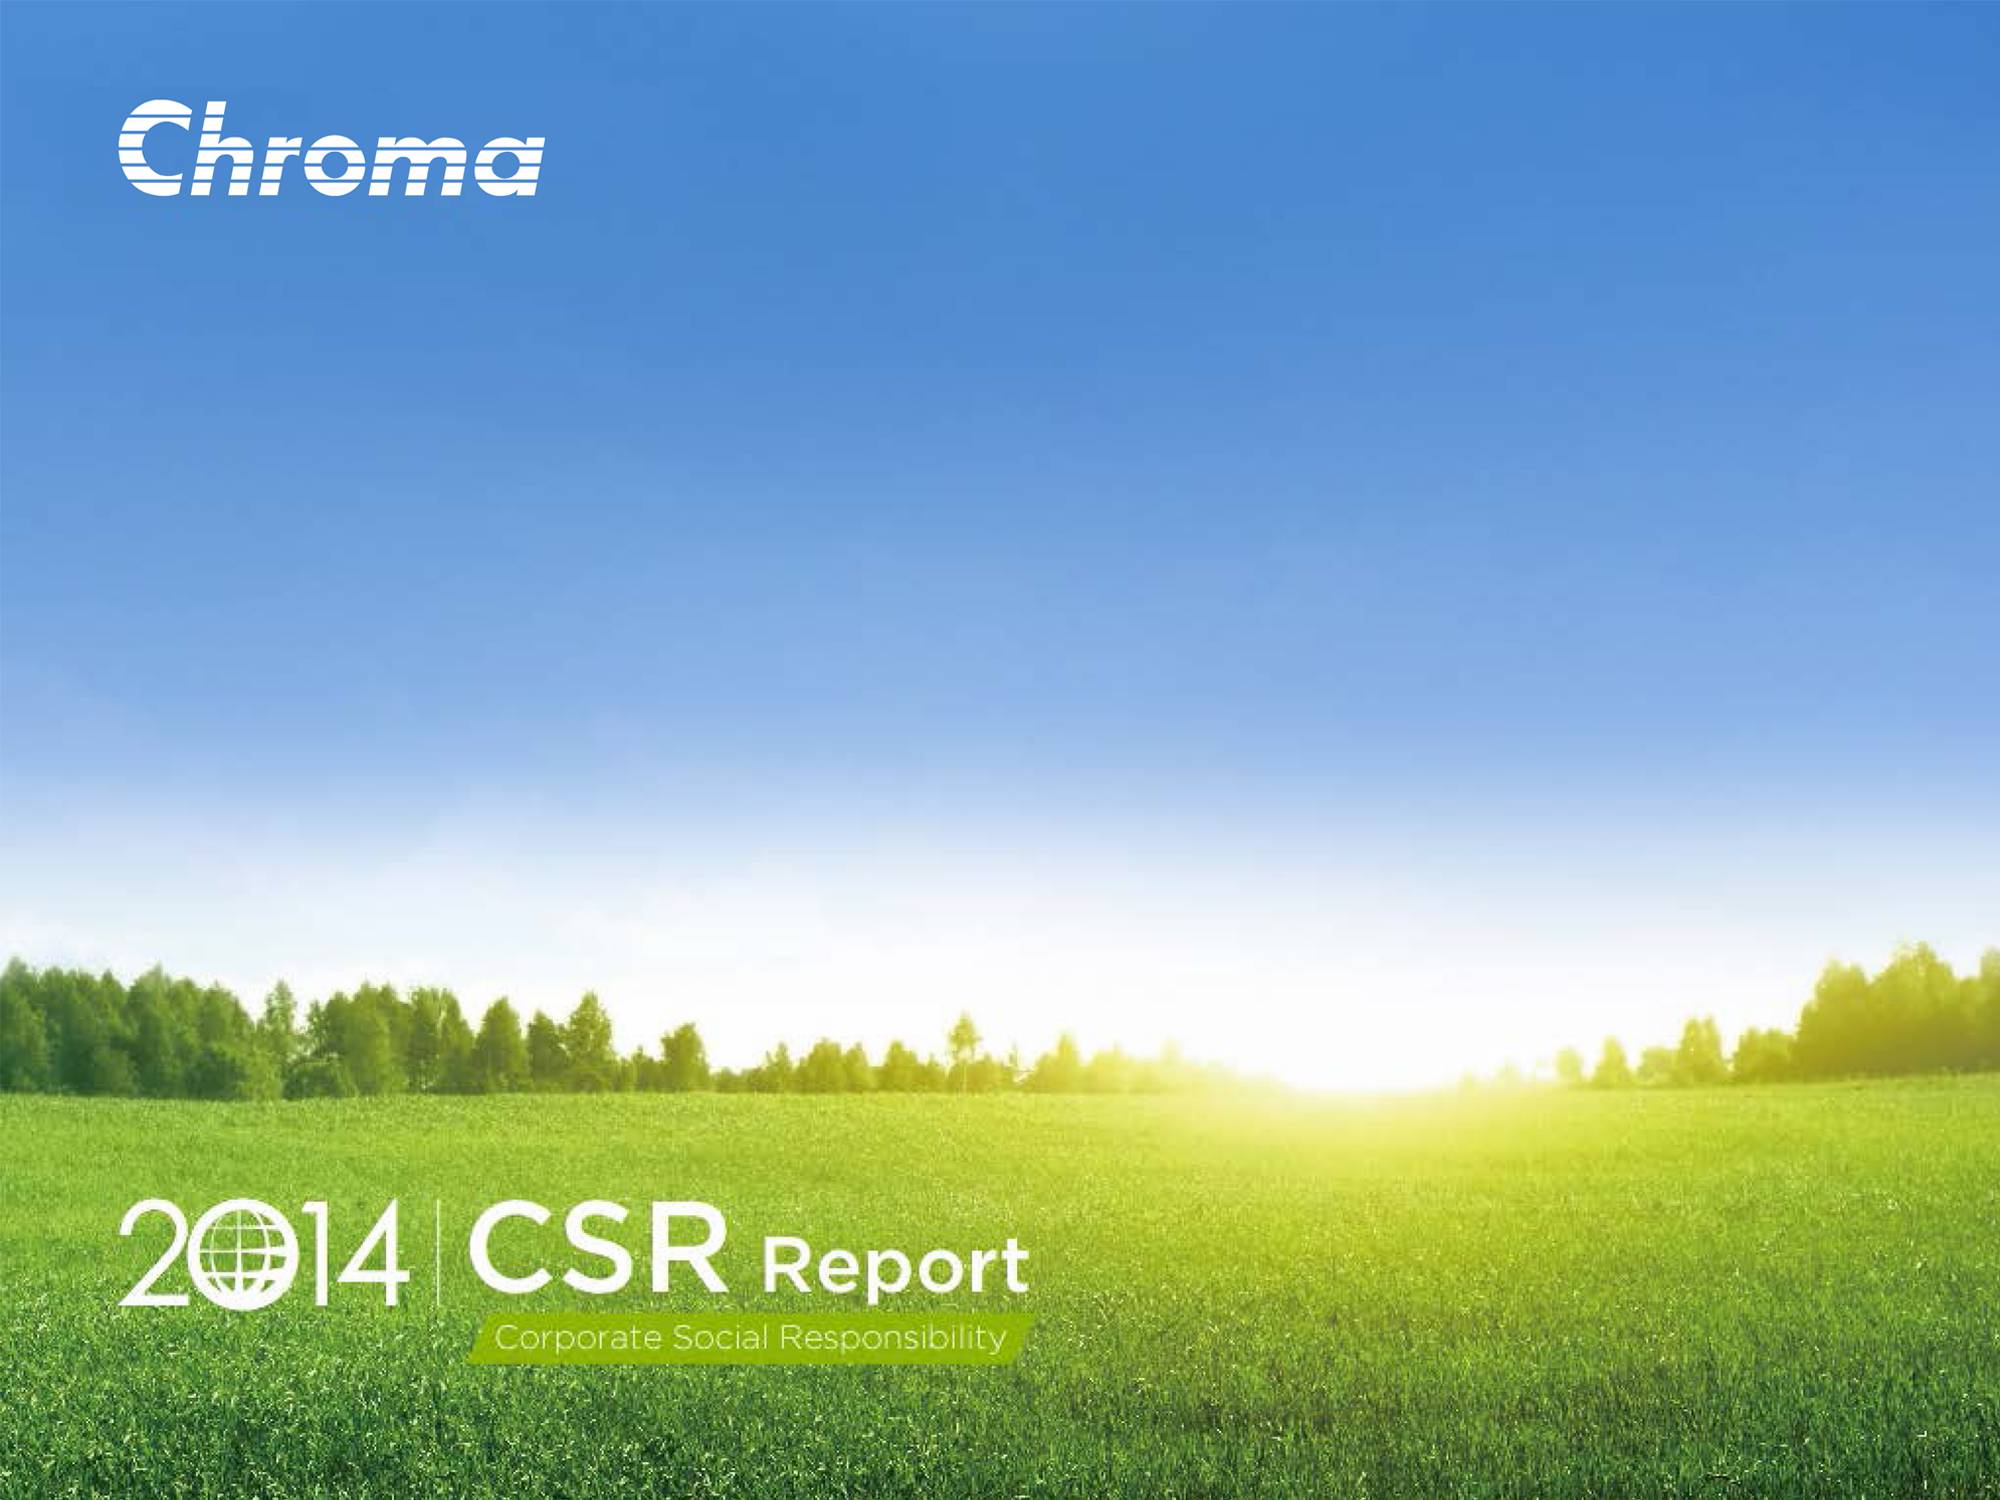 Chroma 2014 CSR Report